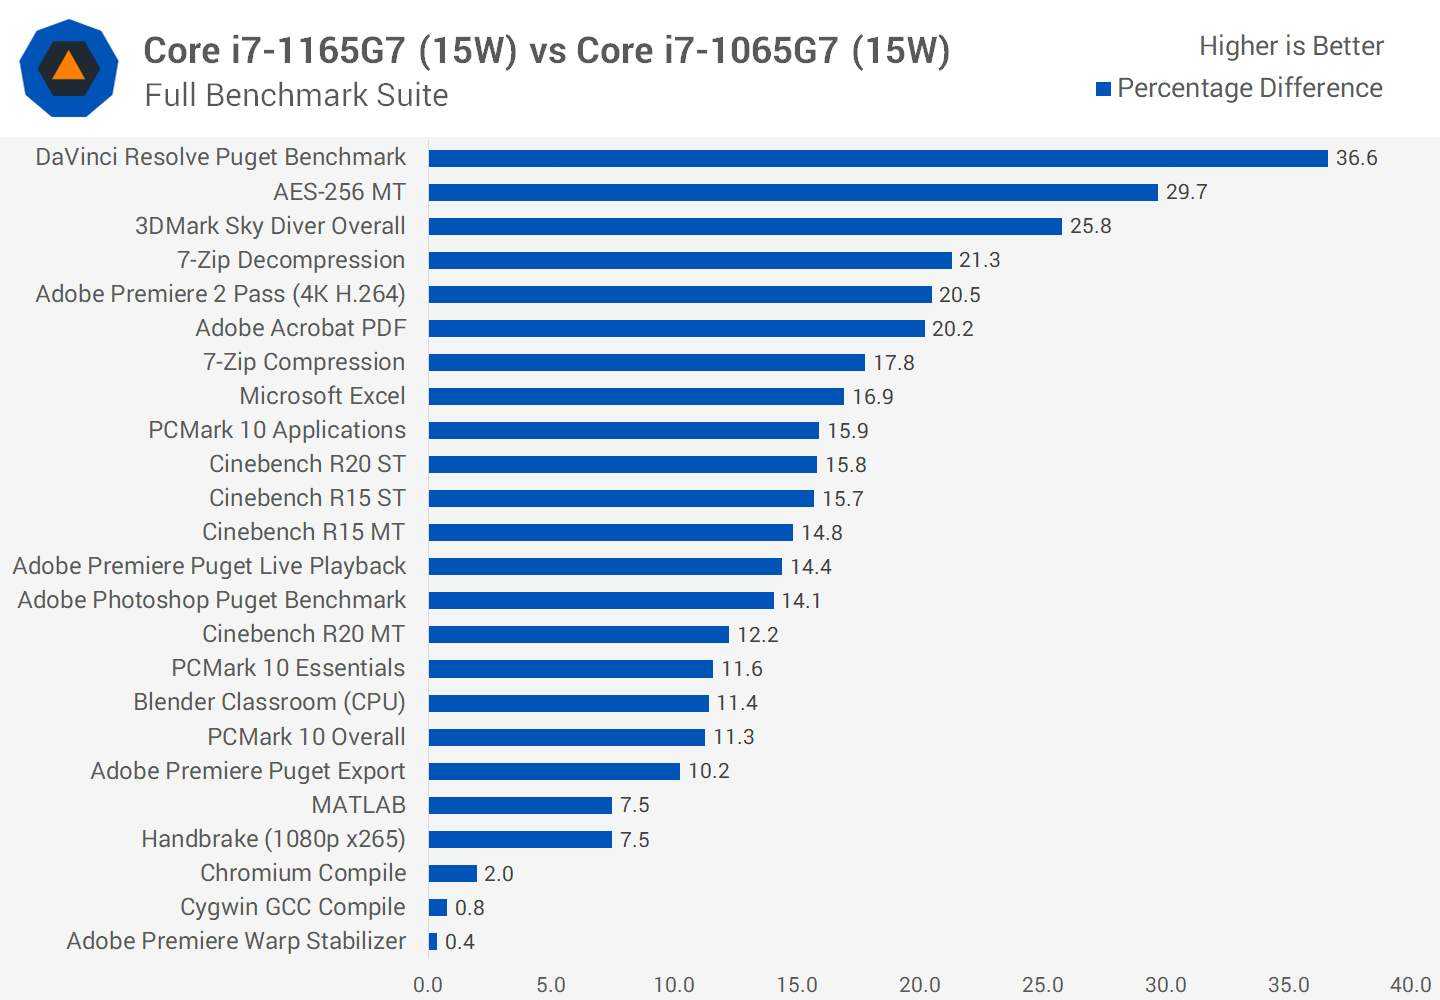 Intel core i5 сравнение производительности